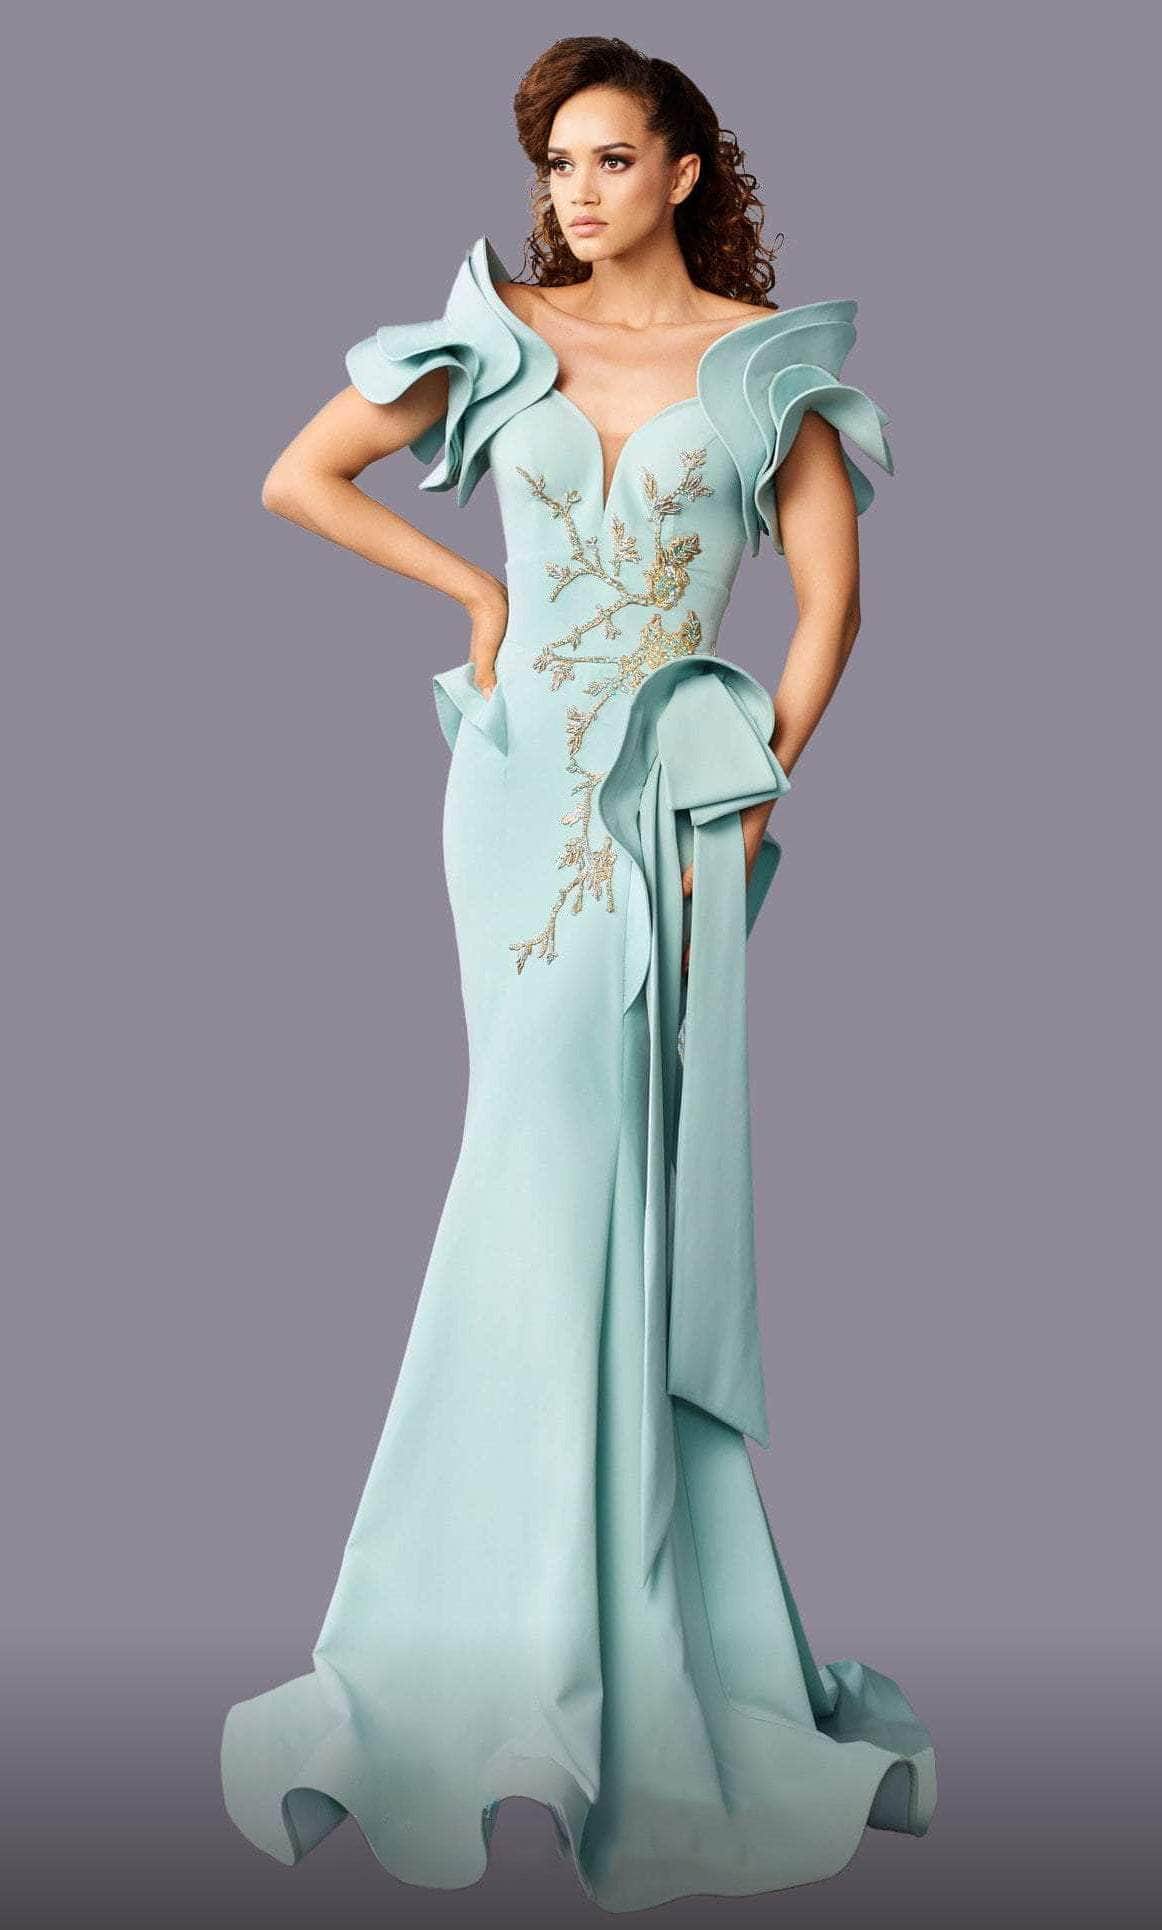 MNM Couture 2670 - Peplum Mermaid Evening Gown Evening Dresses 4 / Mint